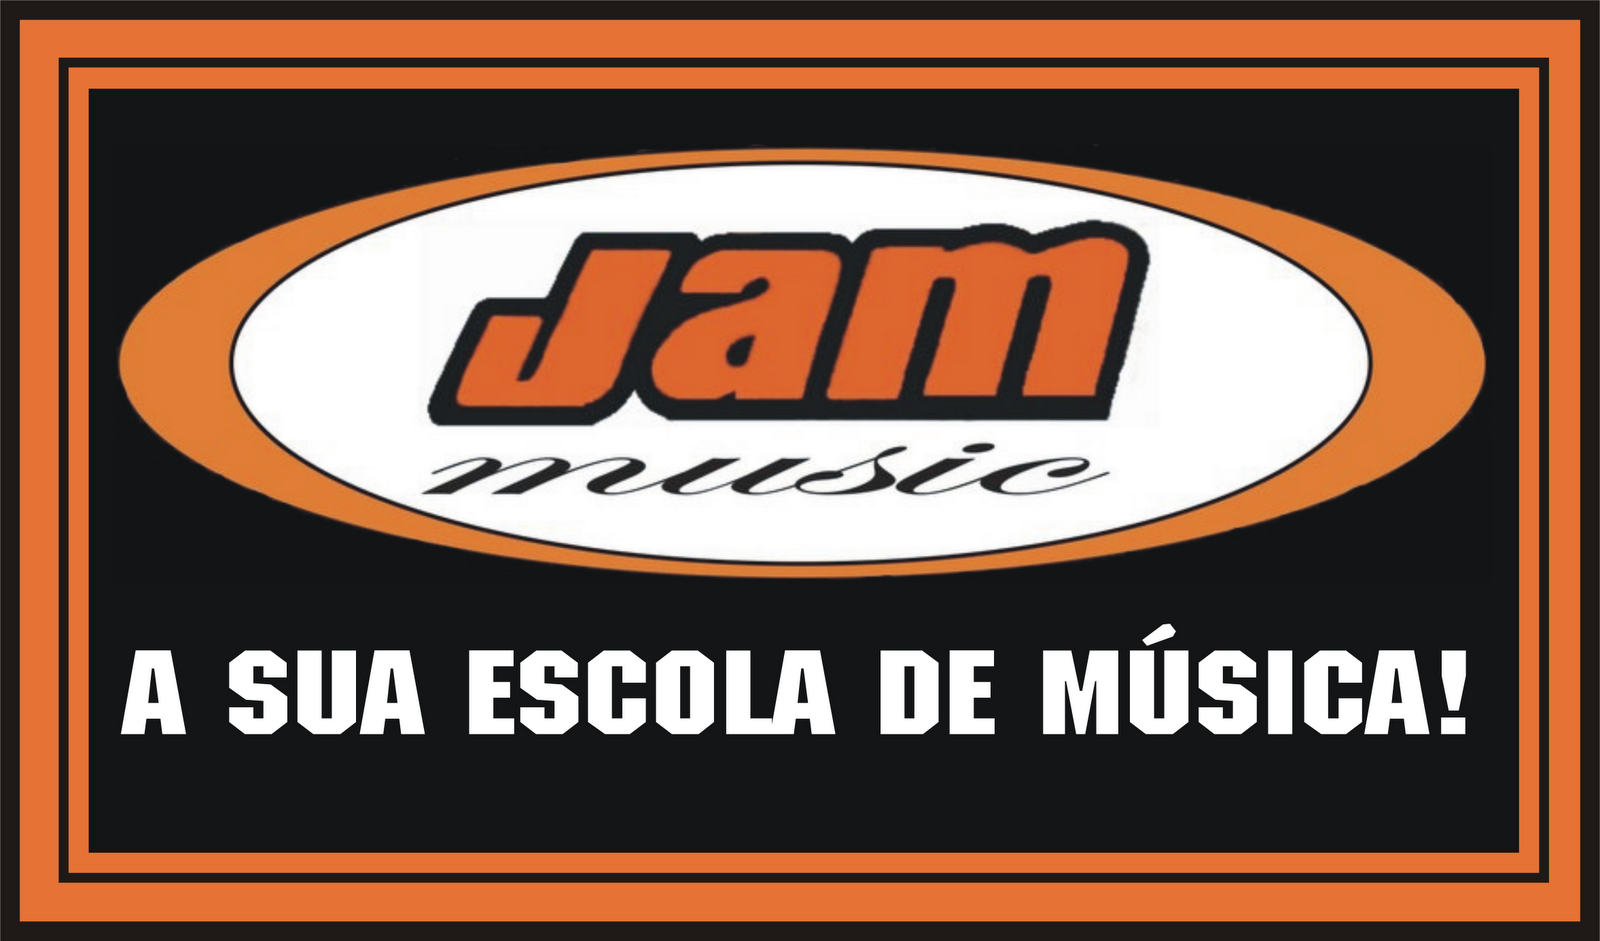 JAM MUSIC